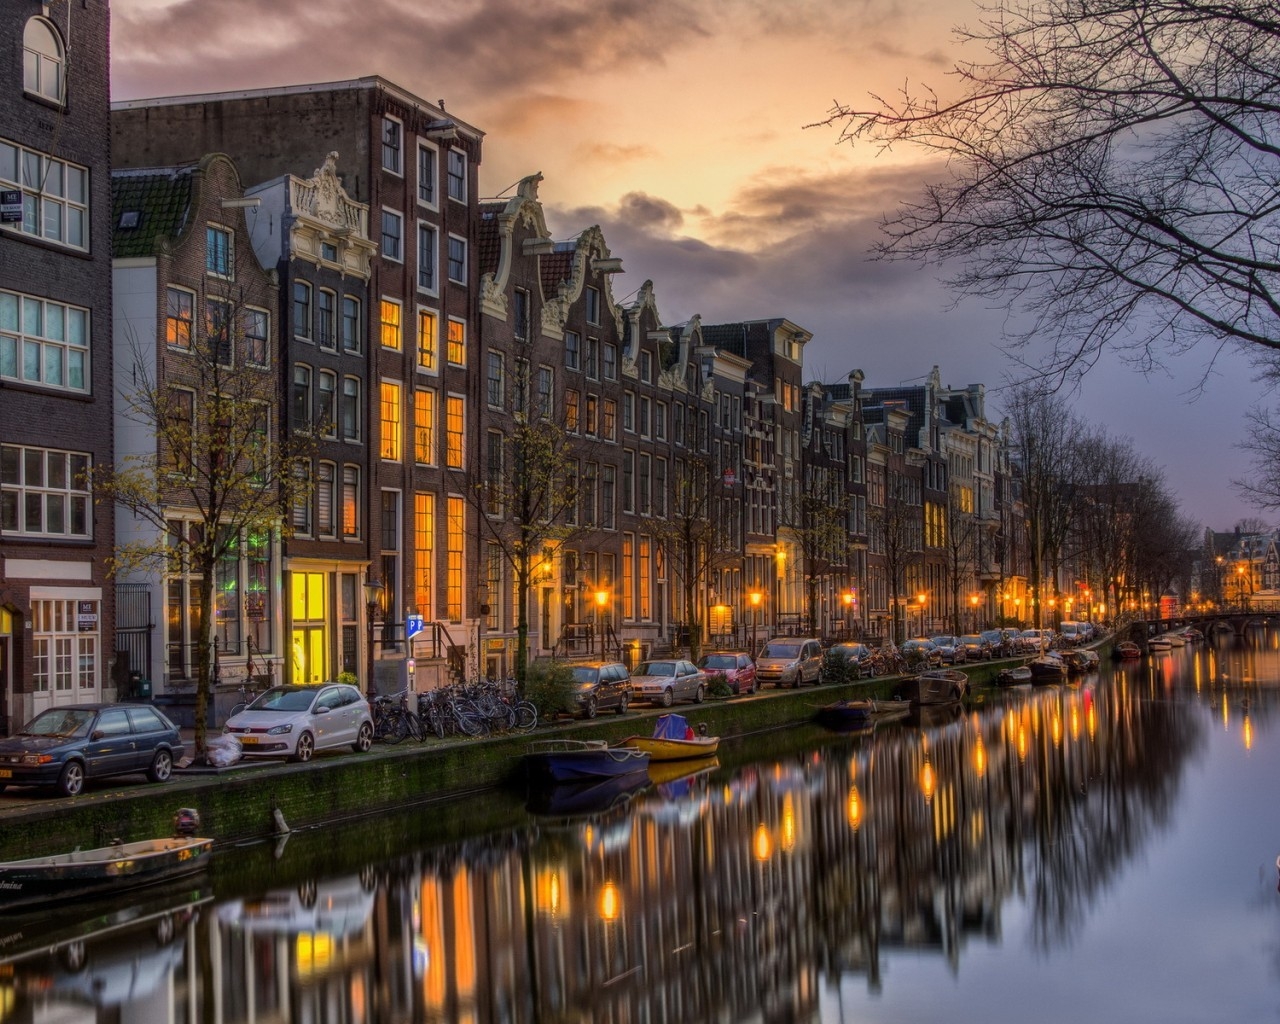 Night in Amsterdam for 1280 x 1024 resolution